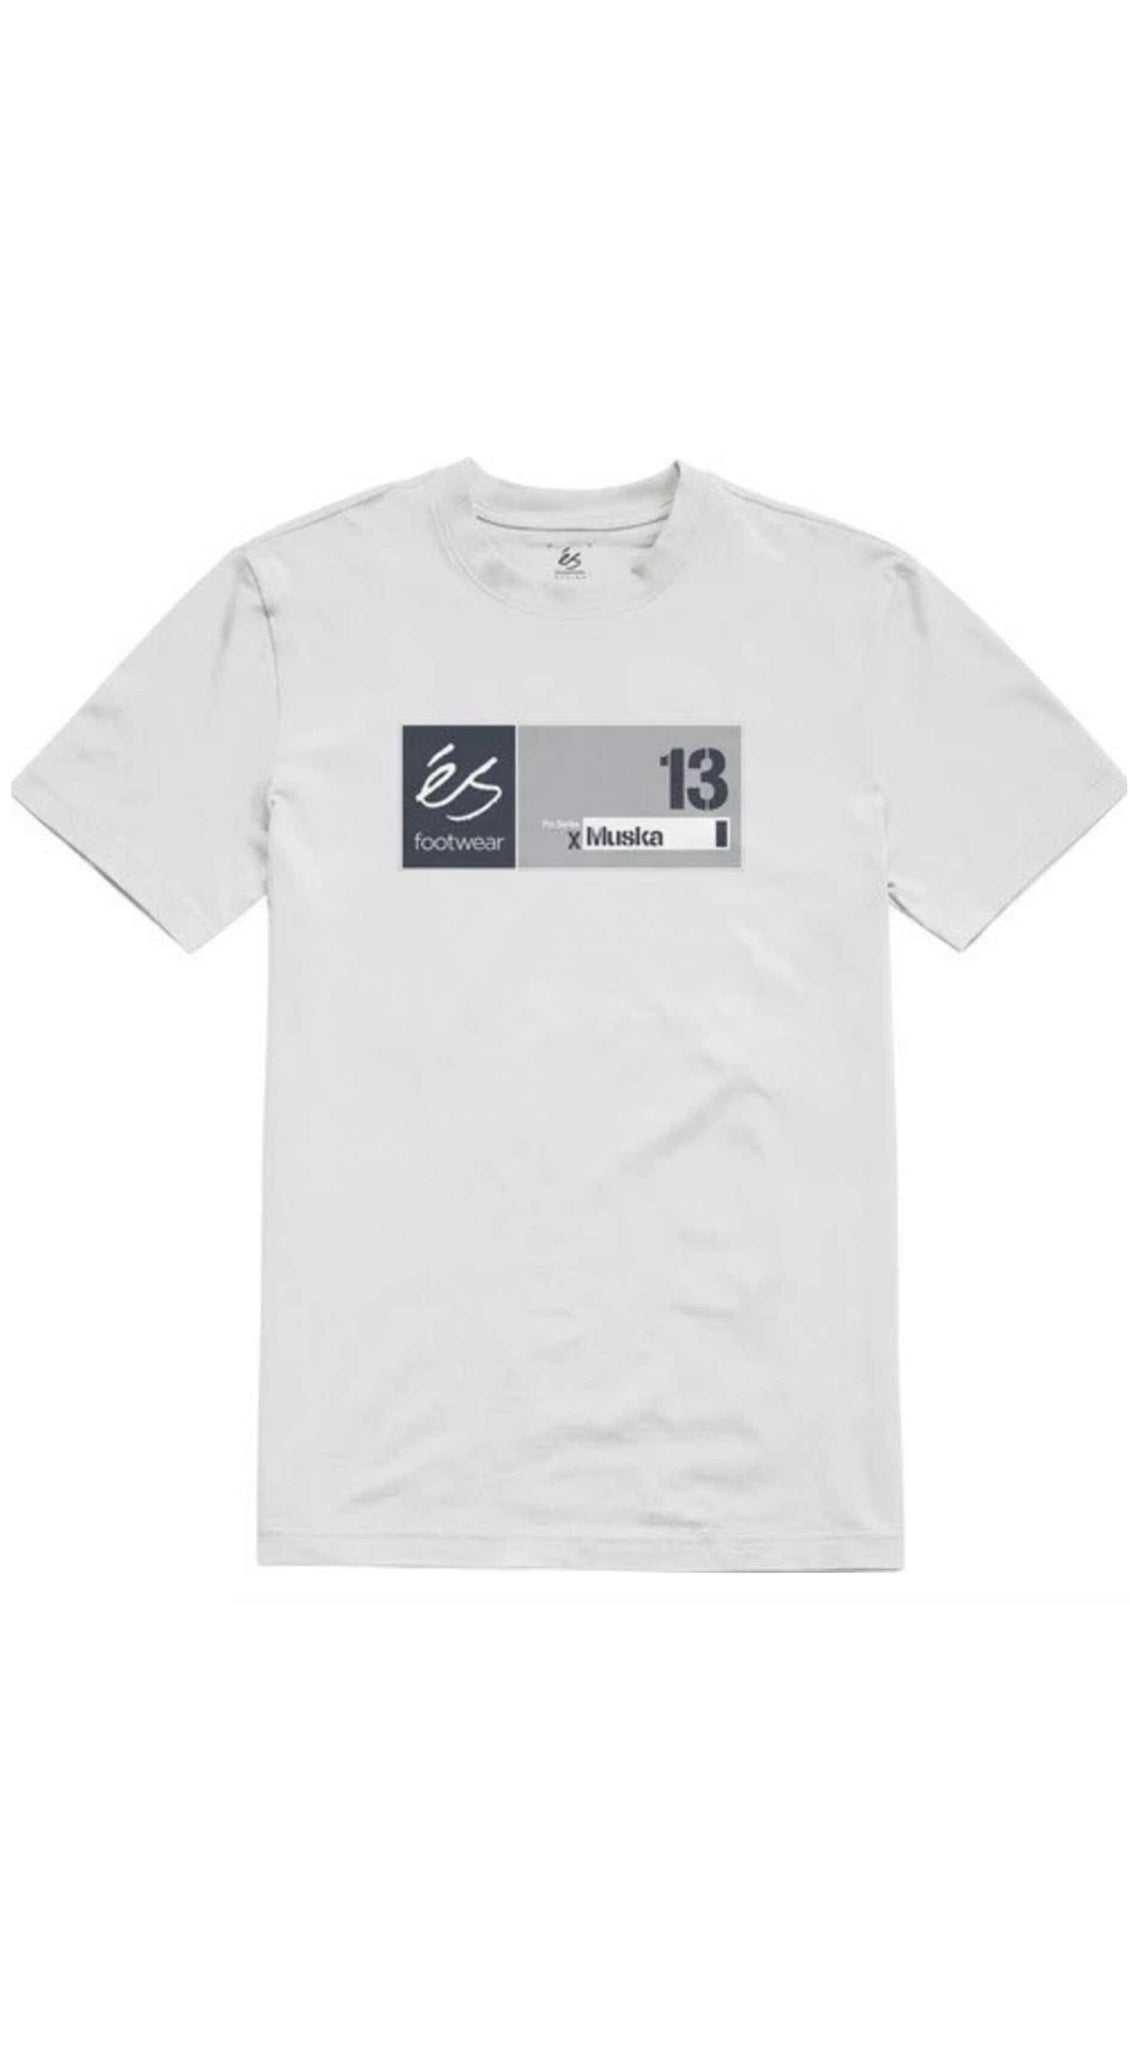 és MUSKA 13 TEE White Tshirt- Camiseta Ropa eS Skateboarding 